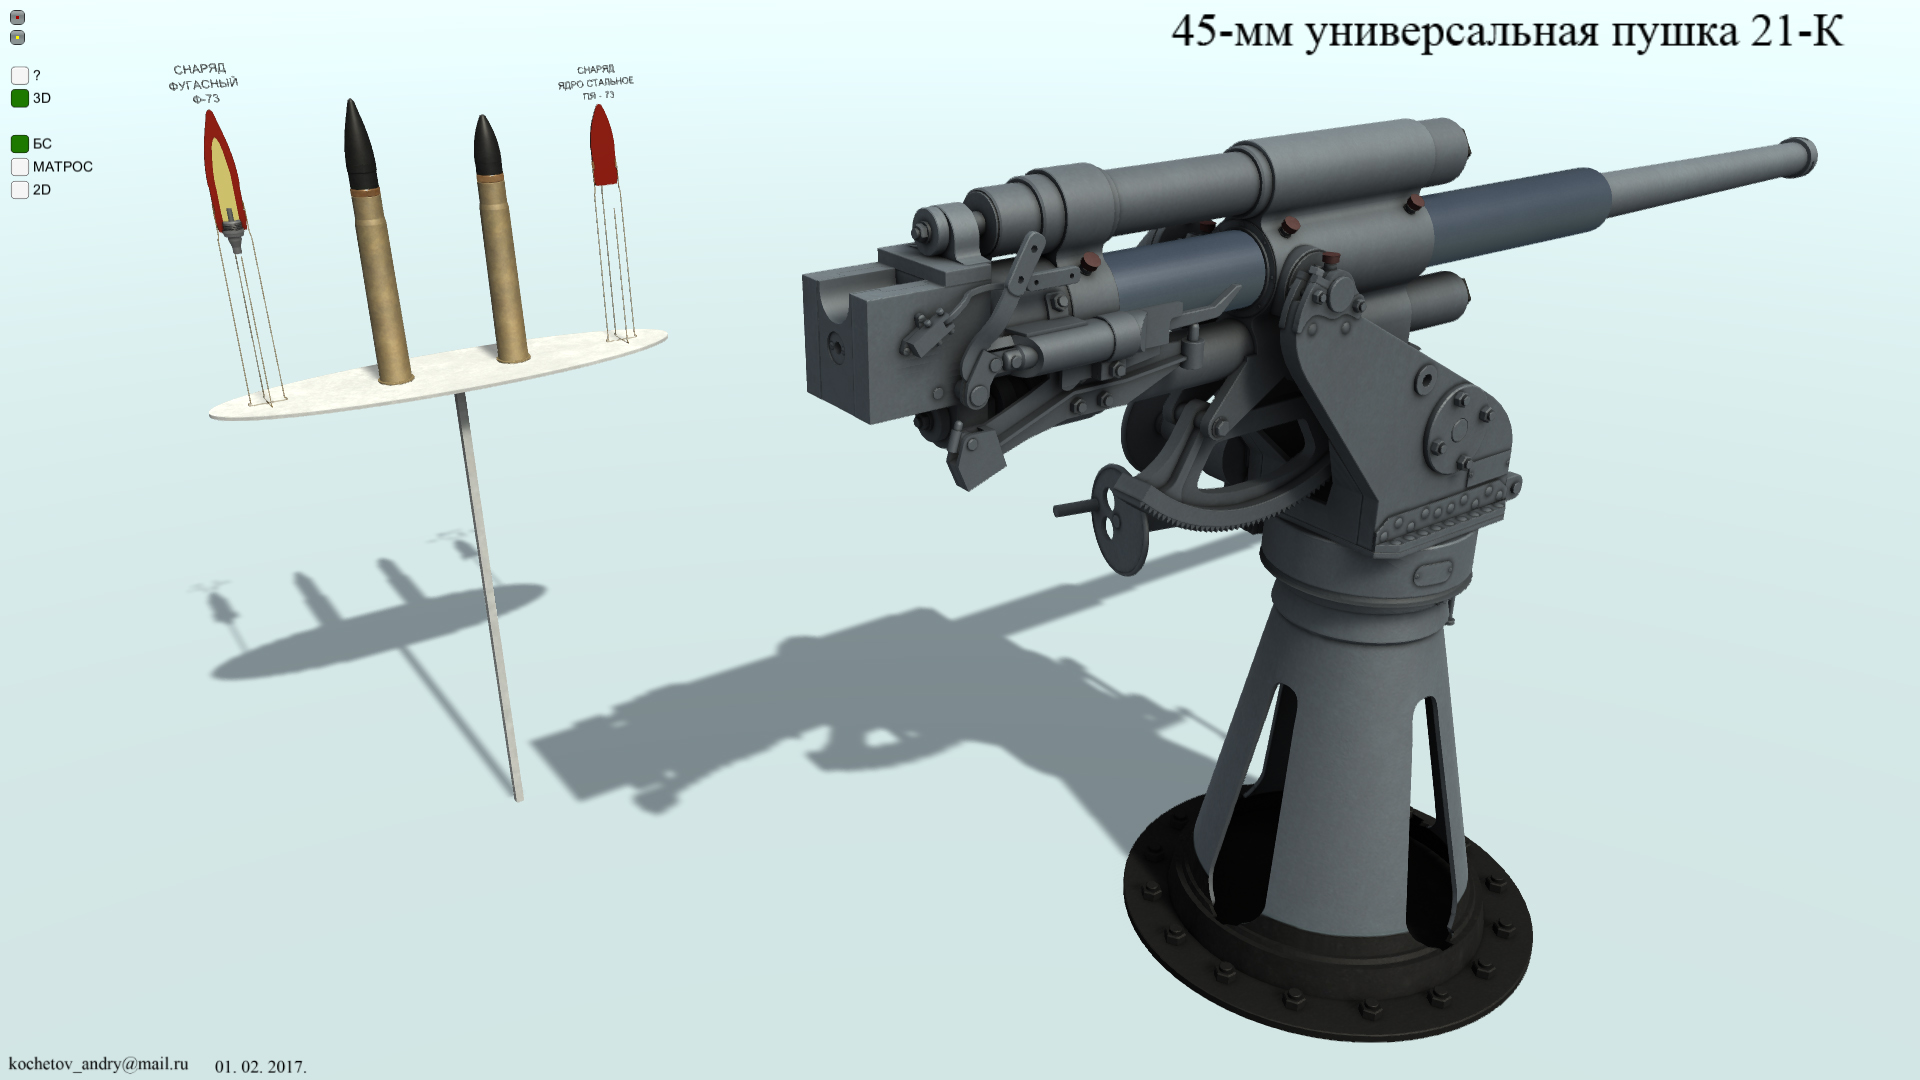 3D model. 45mm 21K Cannon. Морская пушка 45мм 21К.